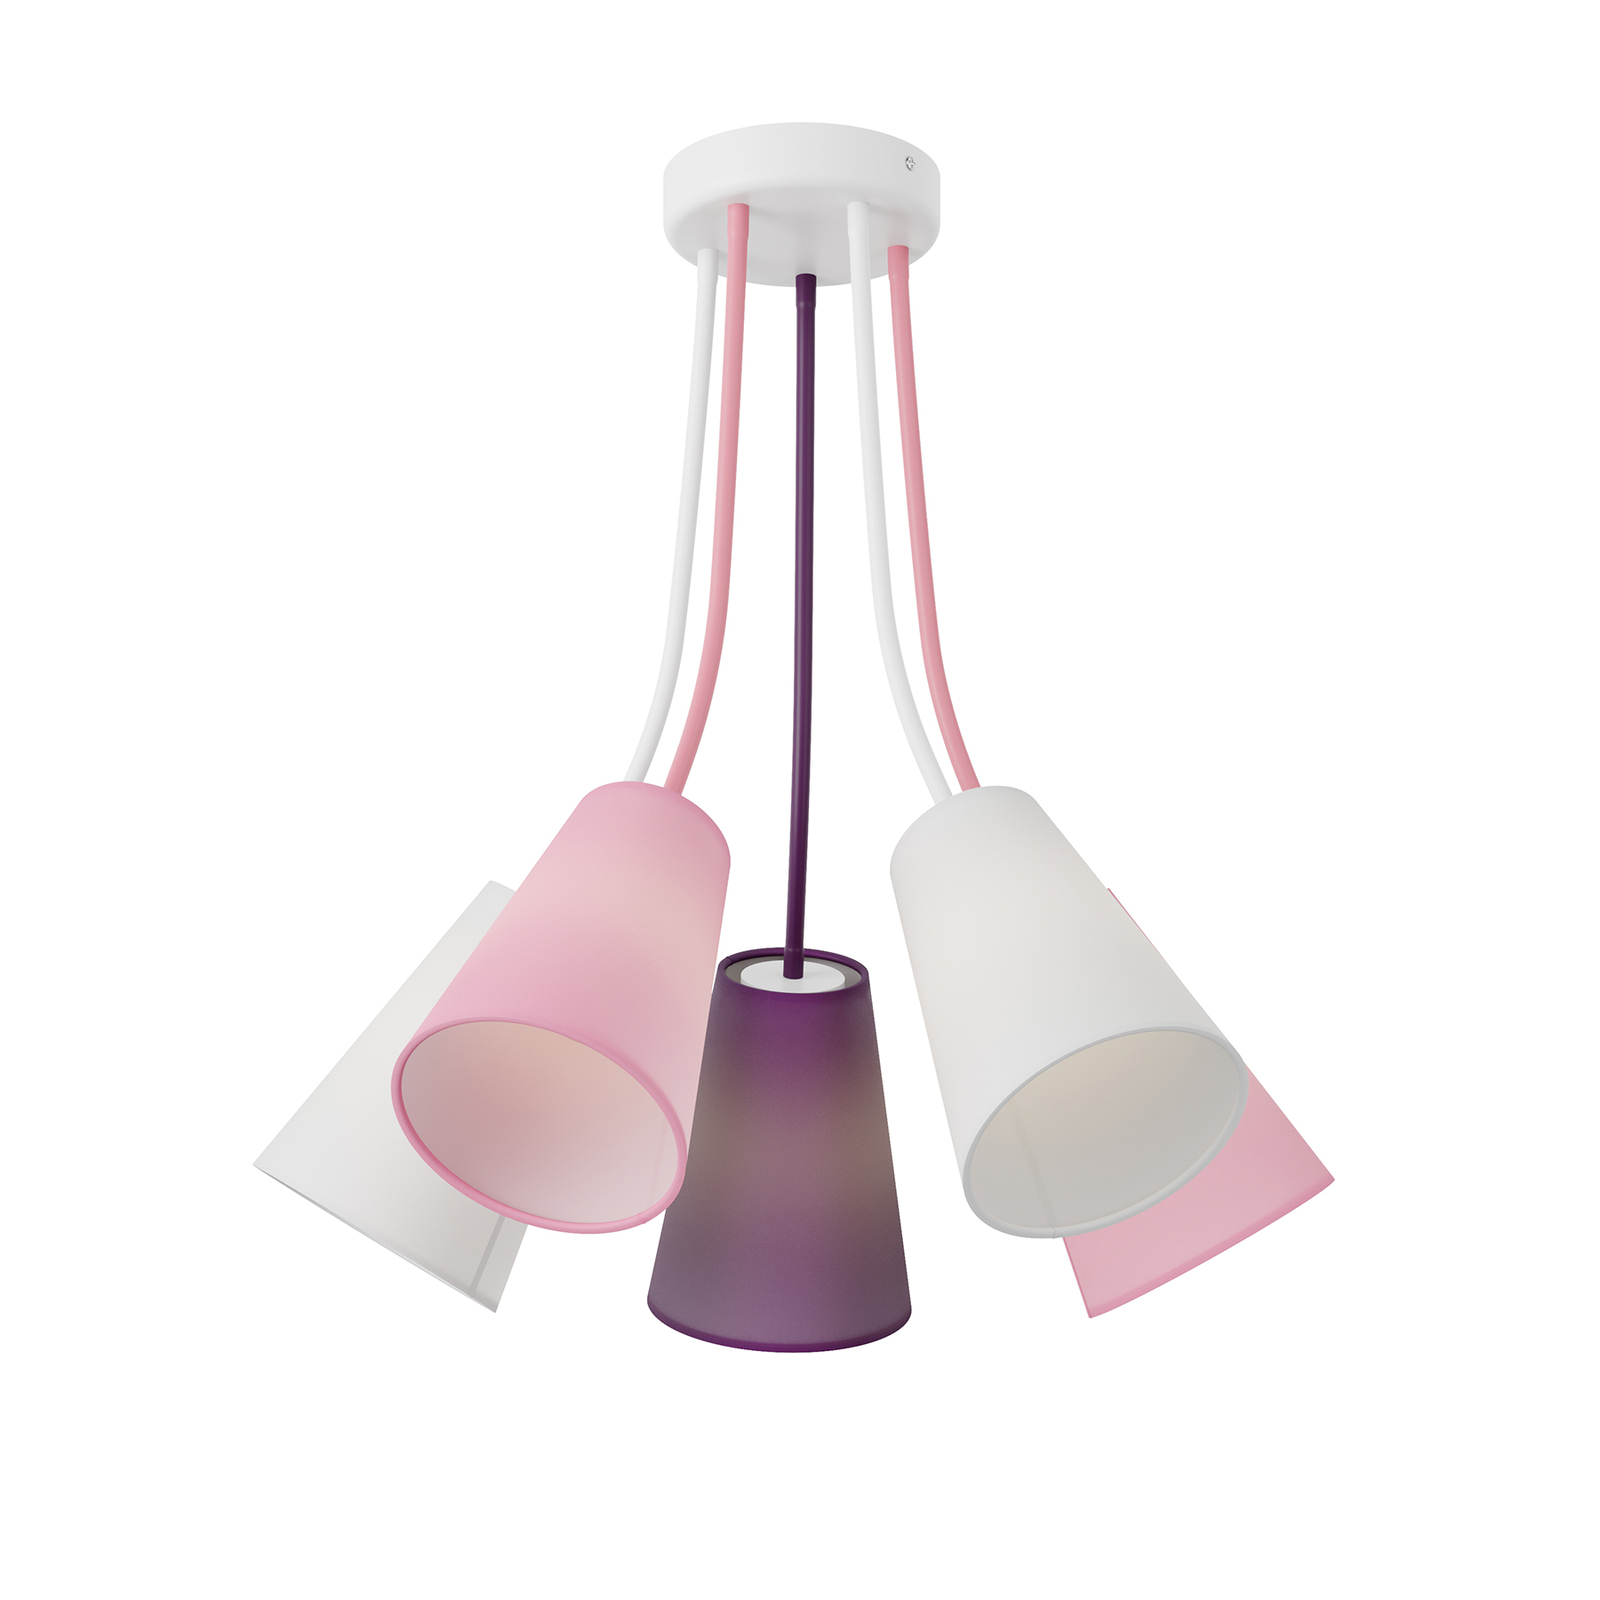 Wire Kids taklampe med 5 lamper, hvit/rosa/lilla